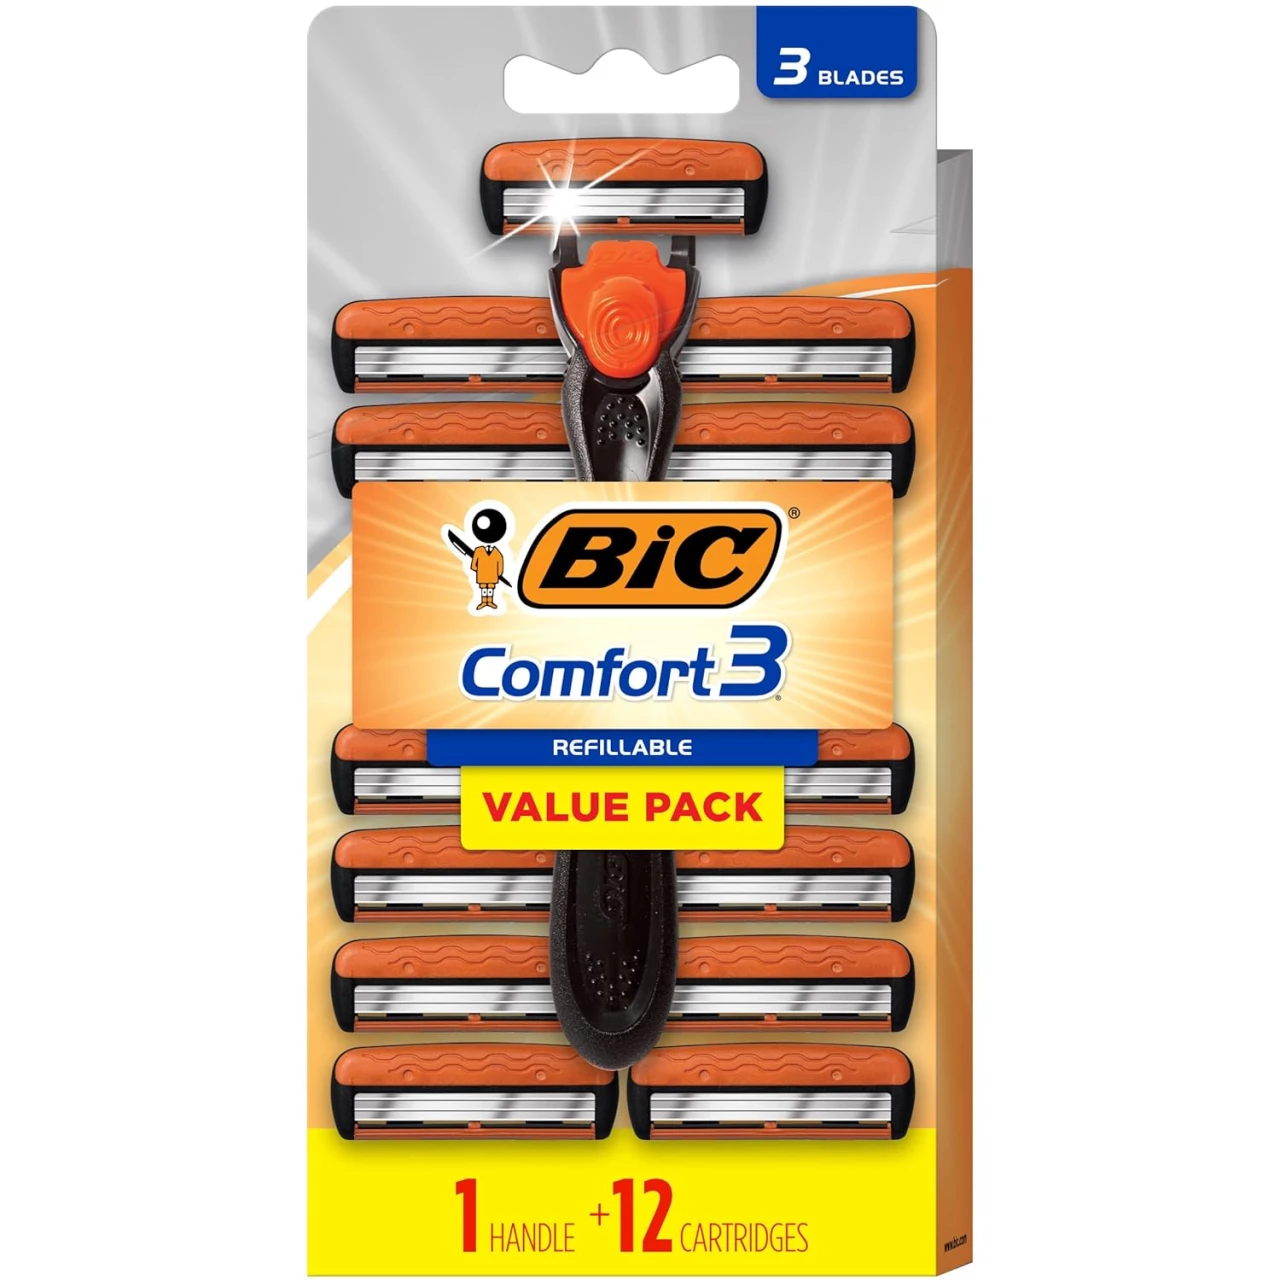 BIC Comfort 3 Refillable Razors for Men